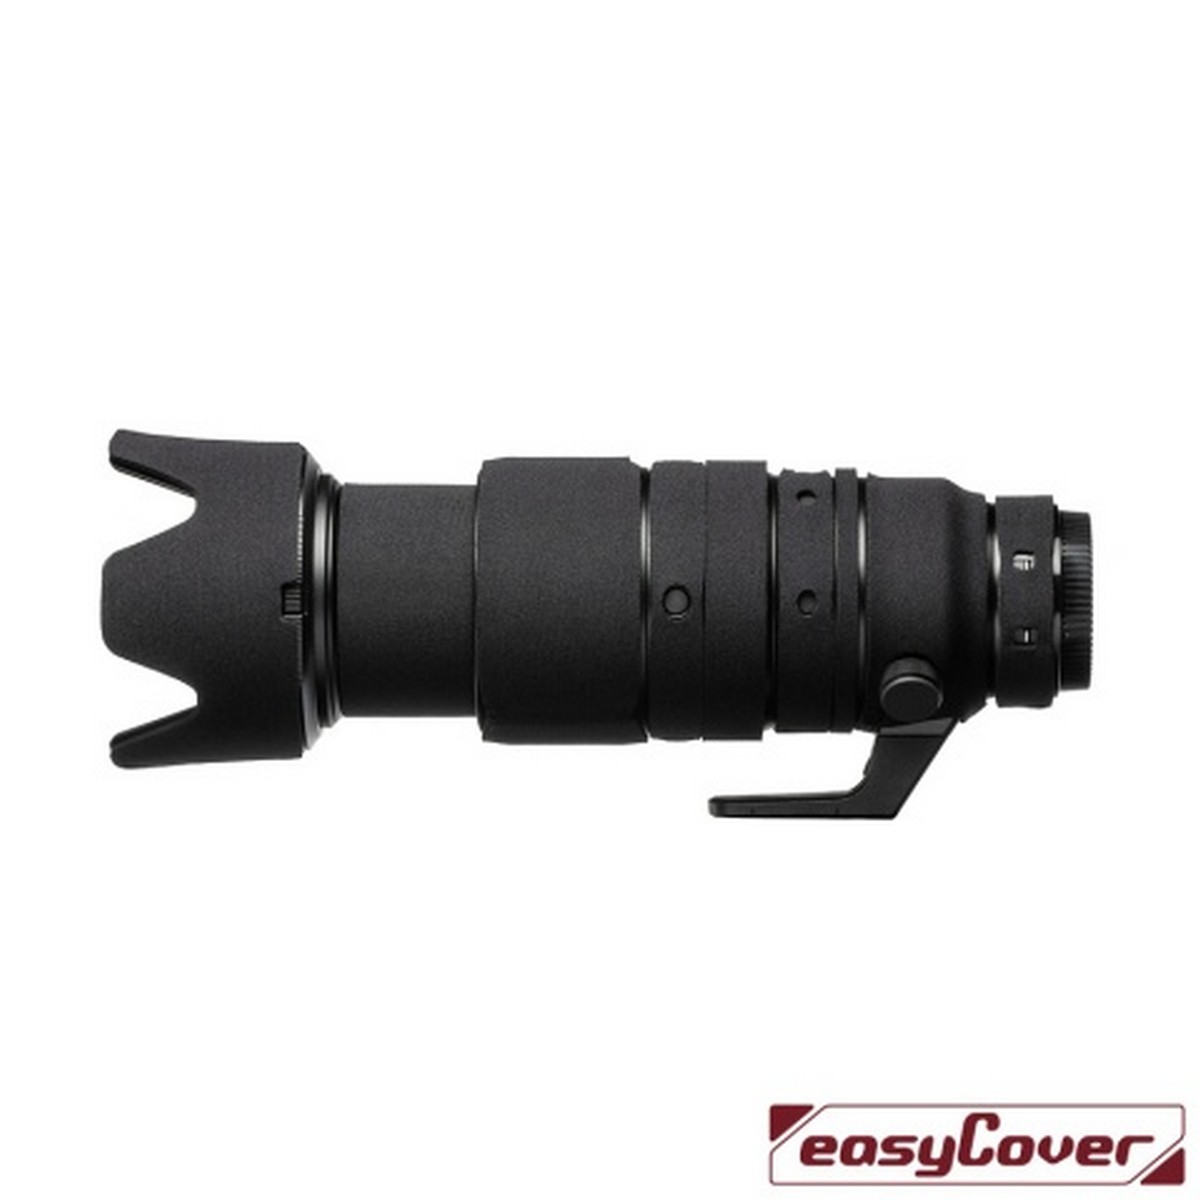 Easycover Lens Oak Objektivschutz für Nikon Z 100-400 mm 1:4.5-5.6 VR S - Schwarz